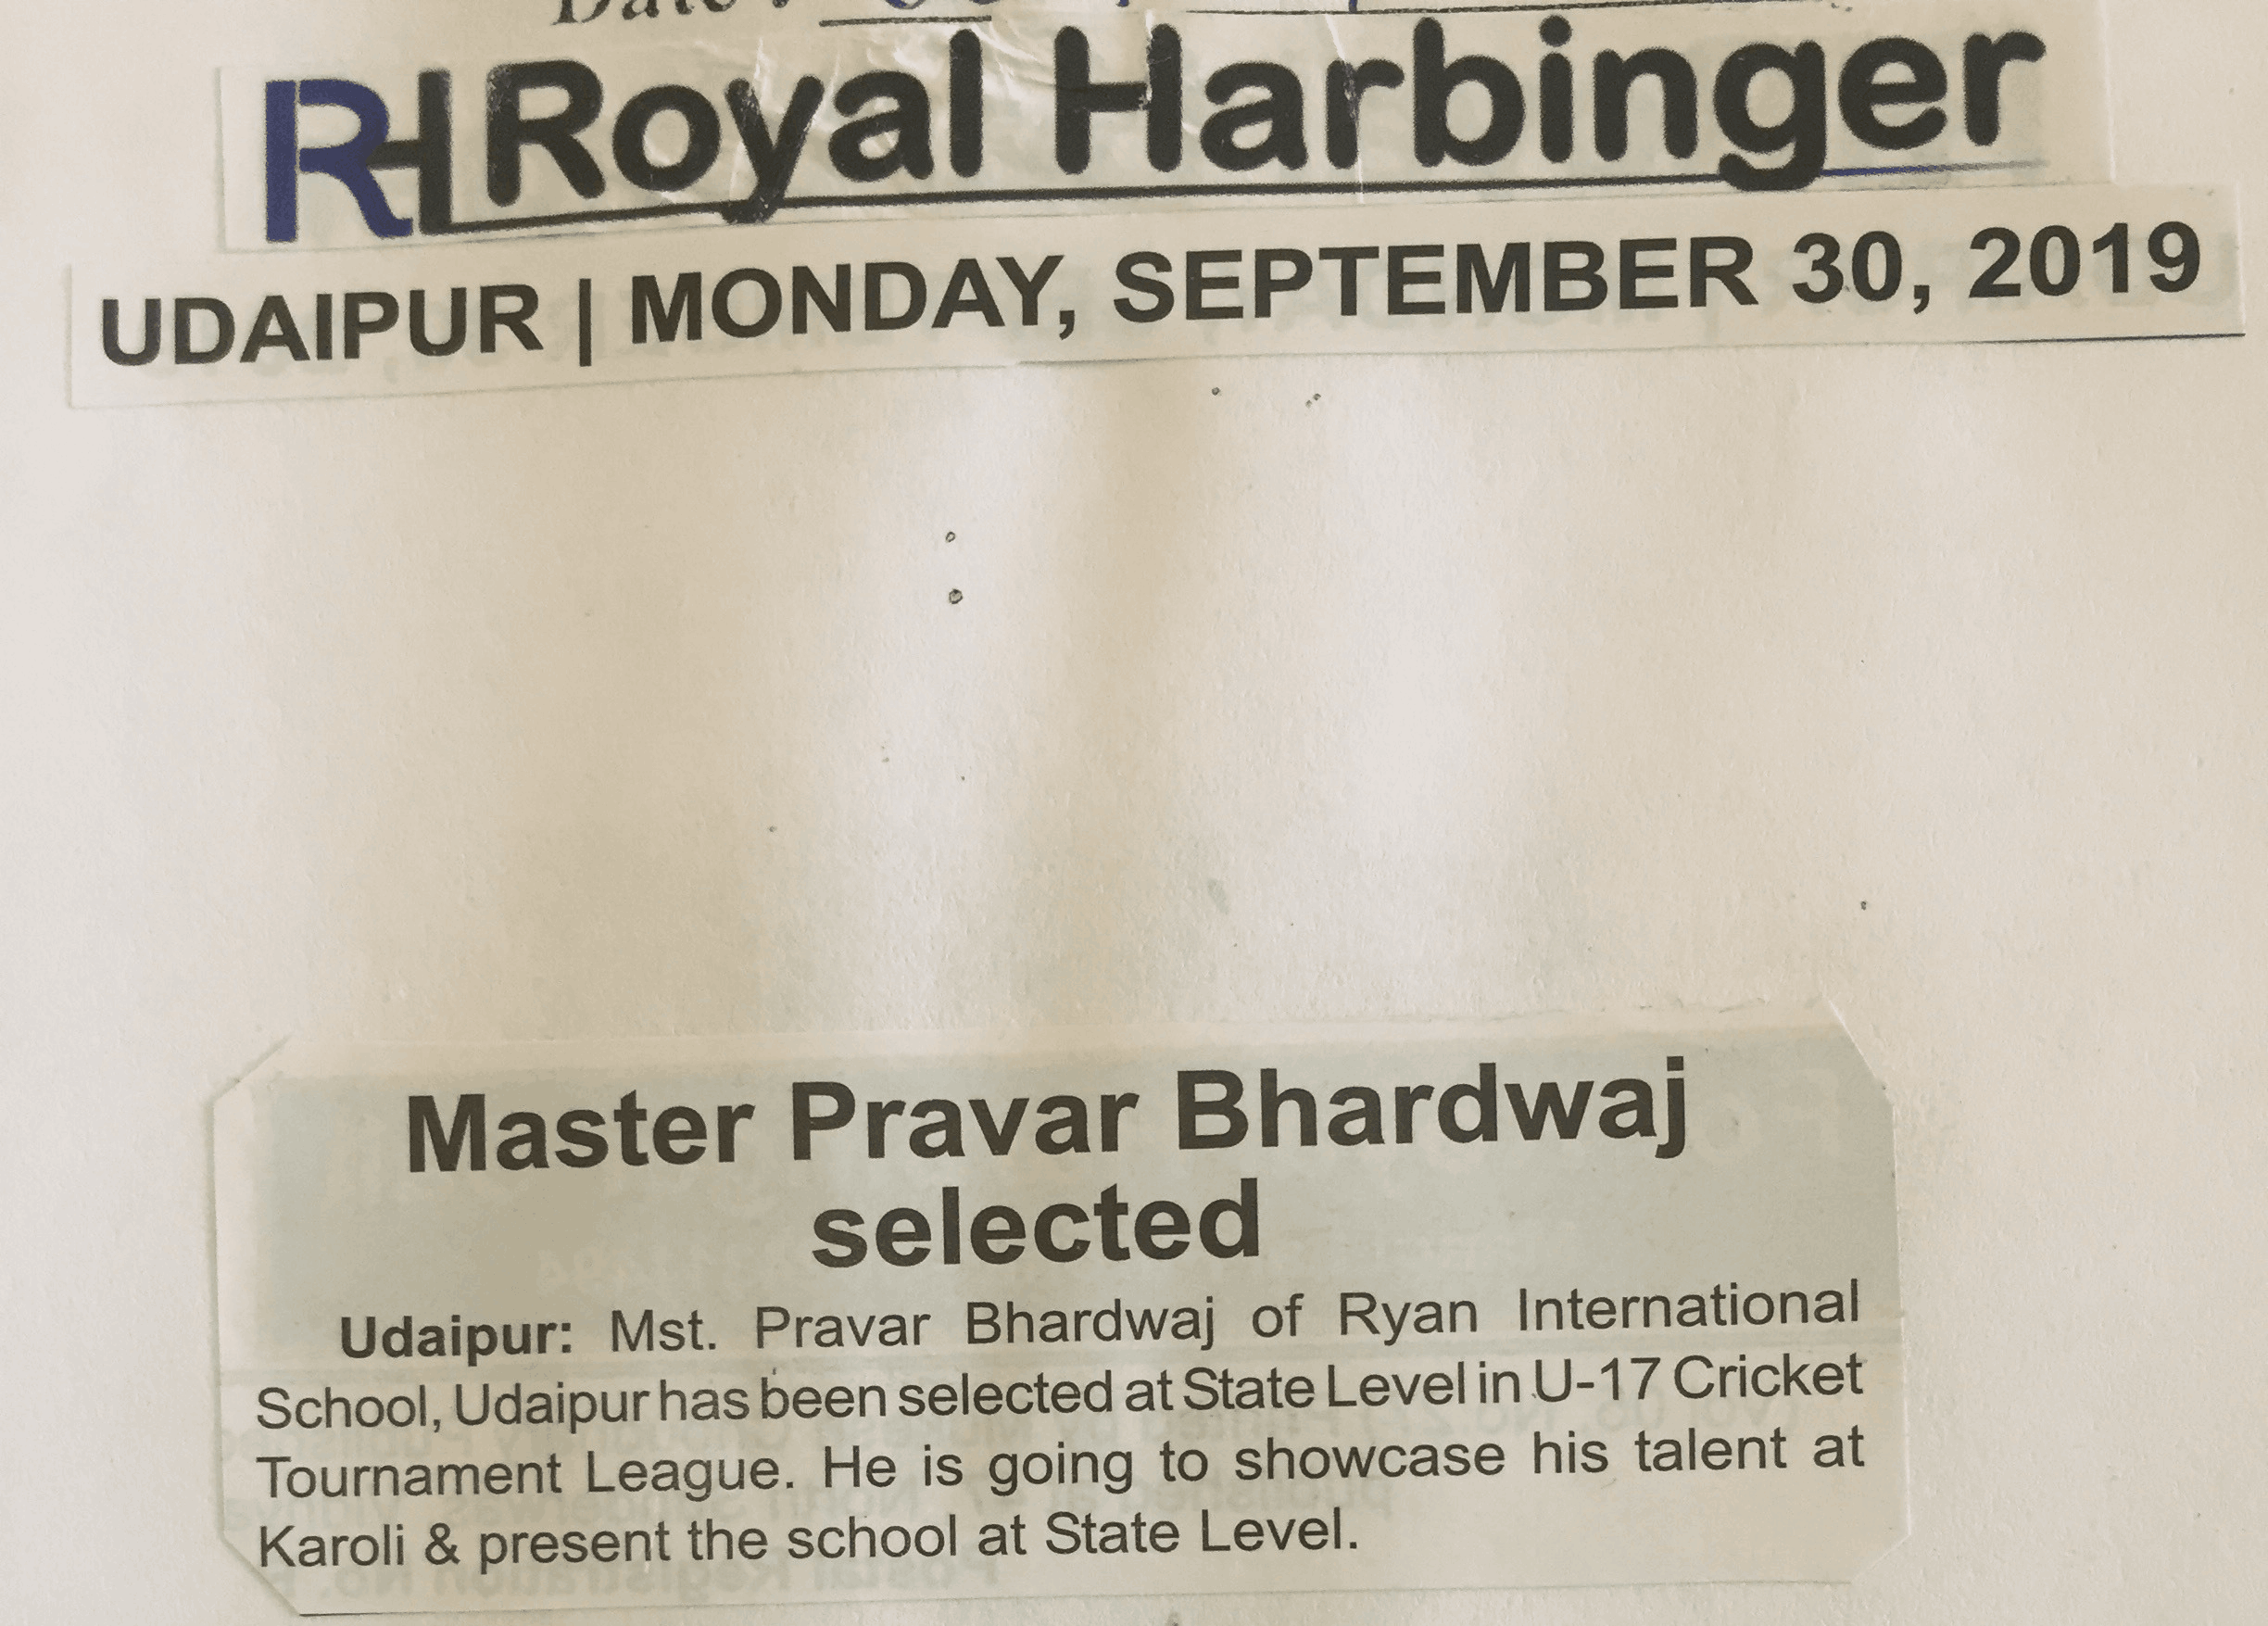 MST. PRAWAR BHARDWAJ STATE LEVEL CRICKET SELECTION - Ryan international School, Udaipur